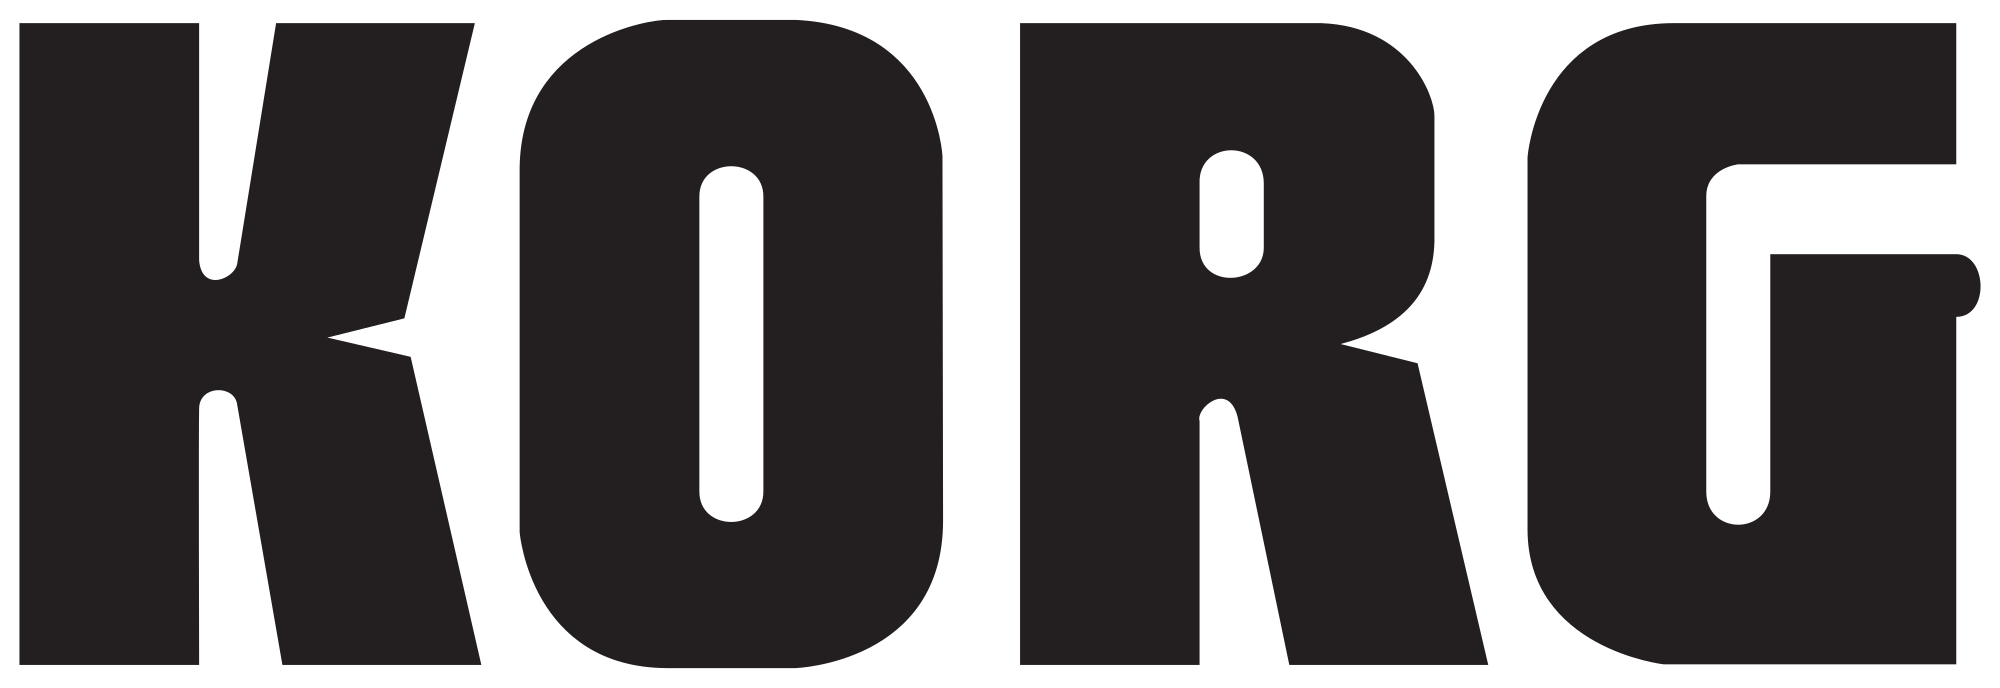 Korg Logo.png